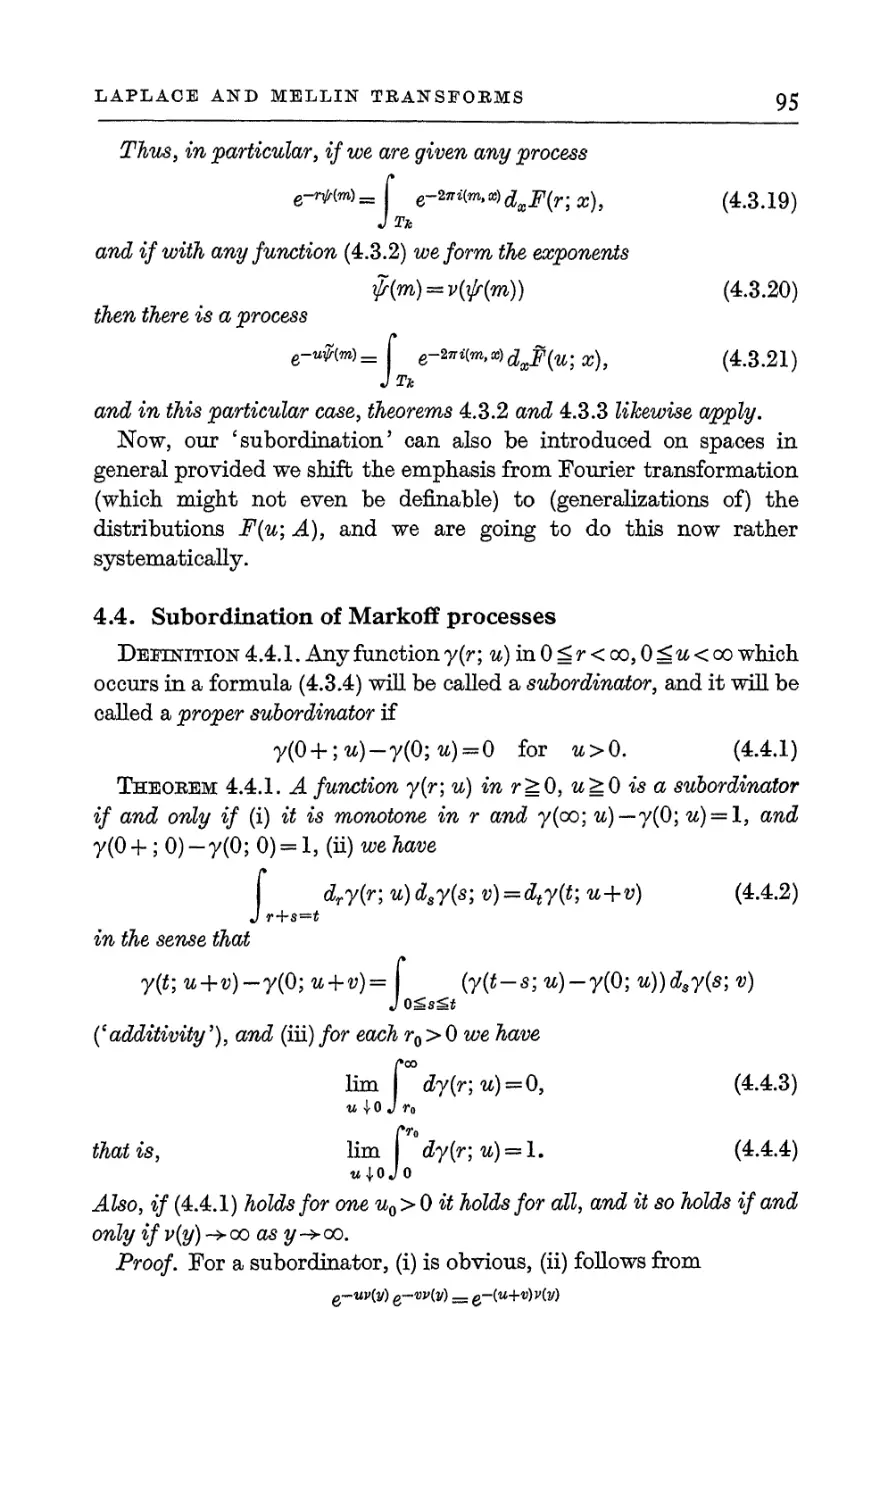 4.4. Subordination of Markoff processes